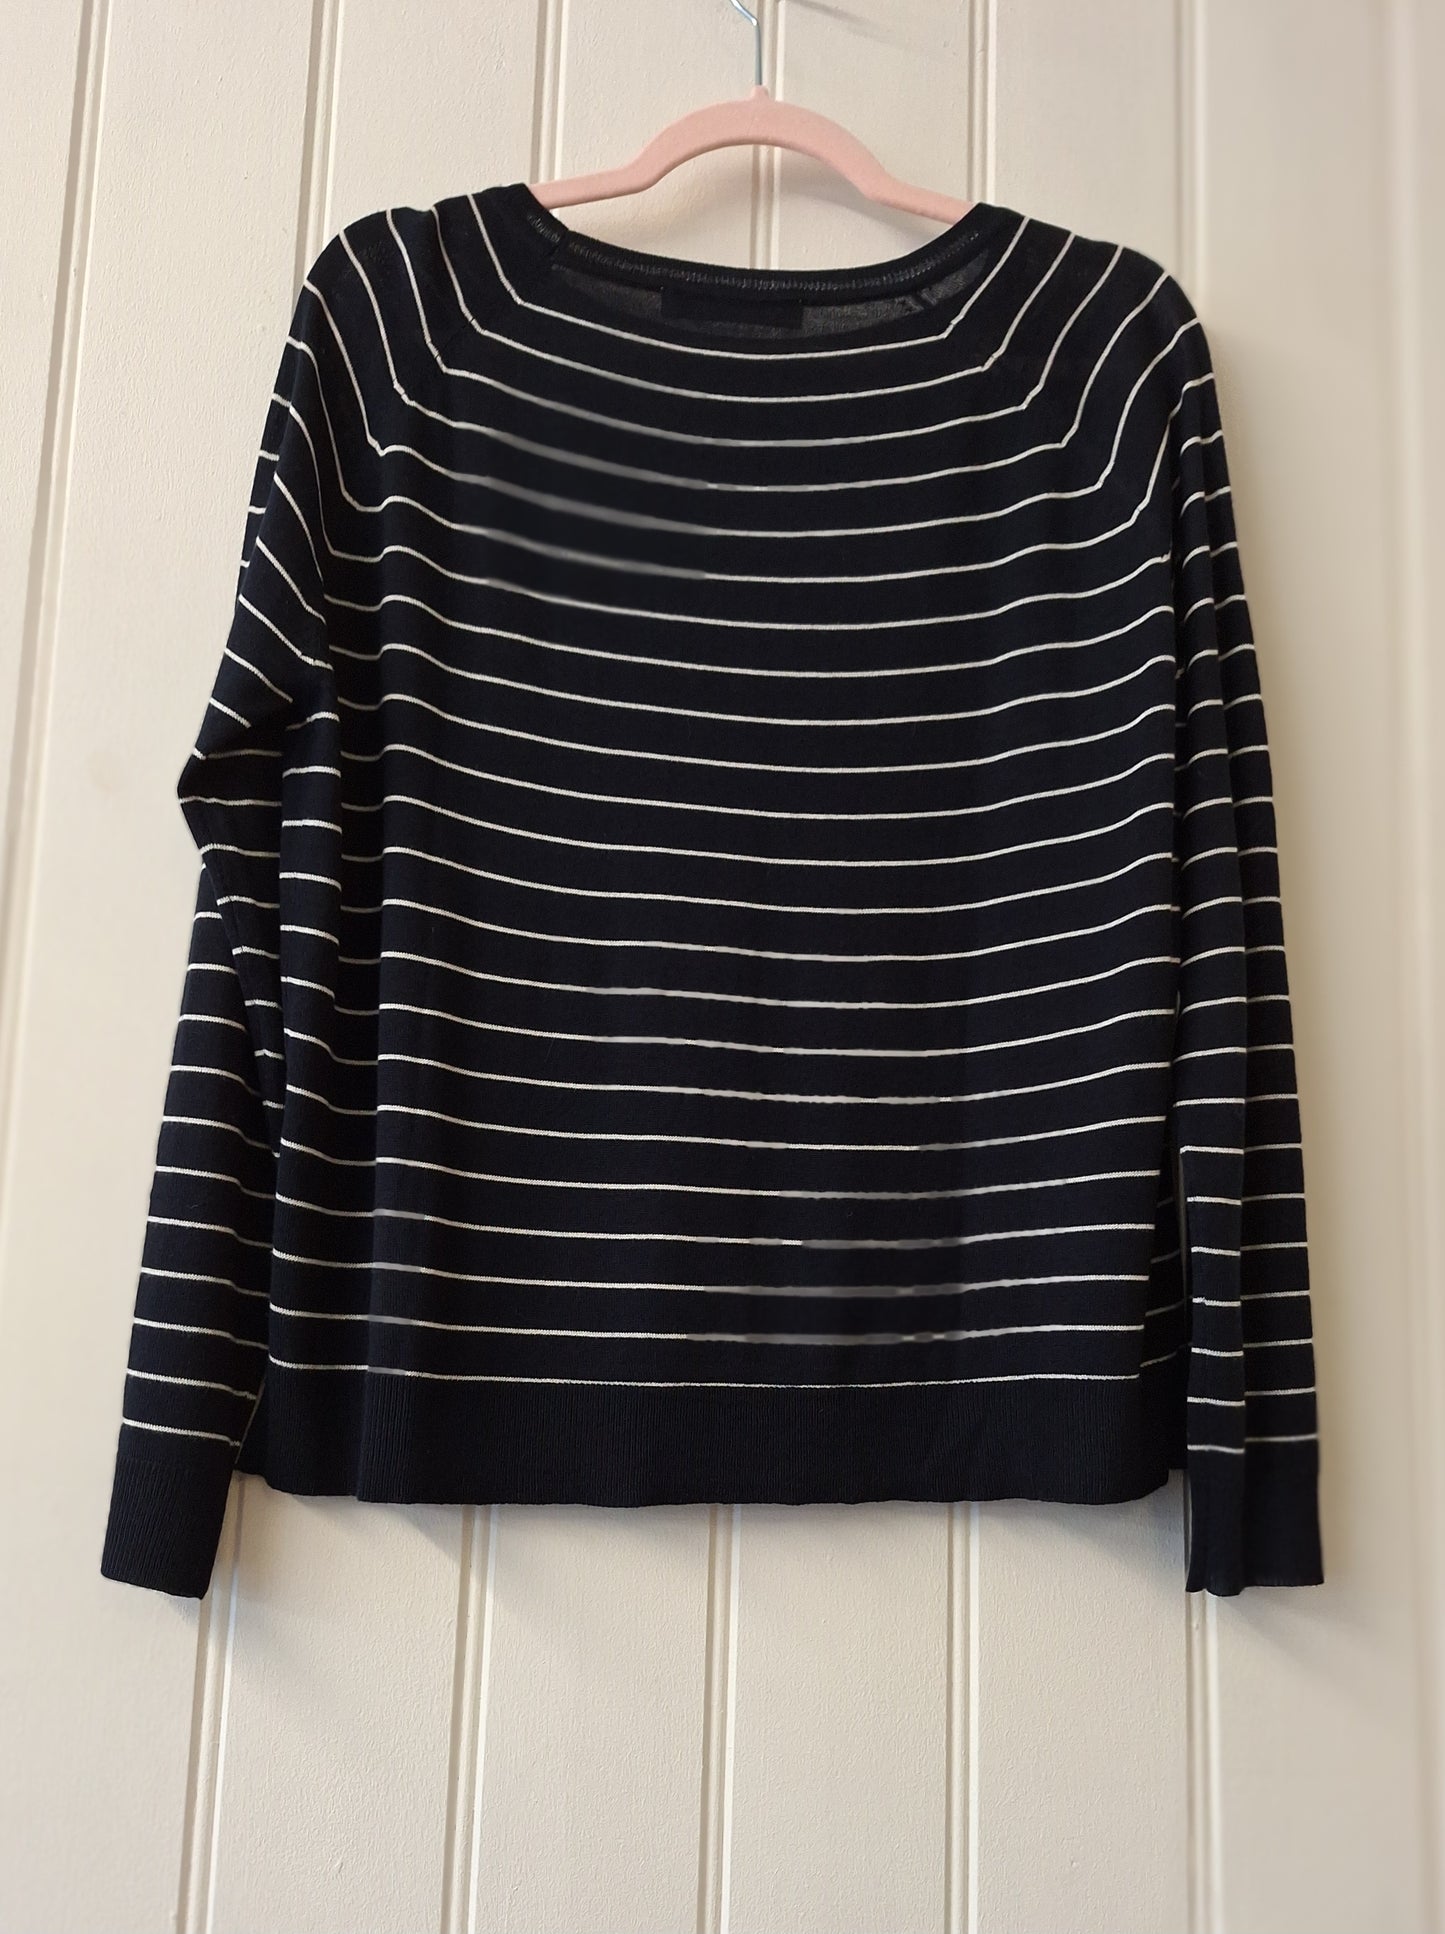 ZARA black and white stripe knit M